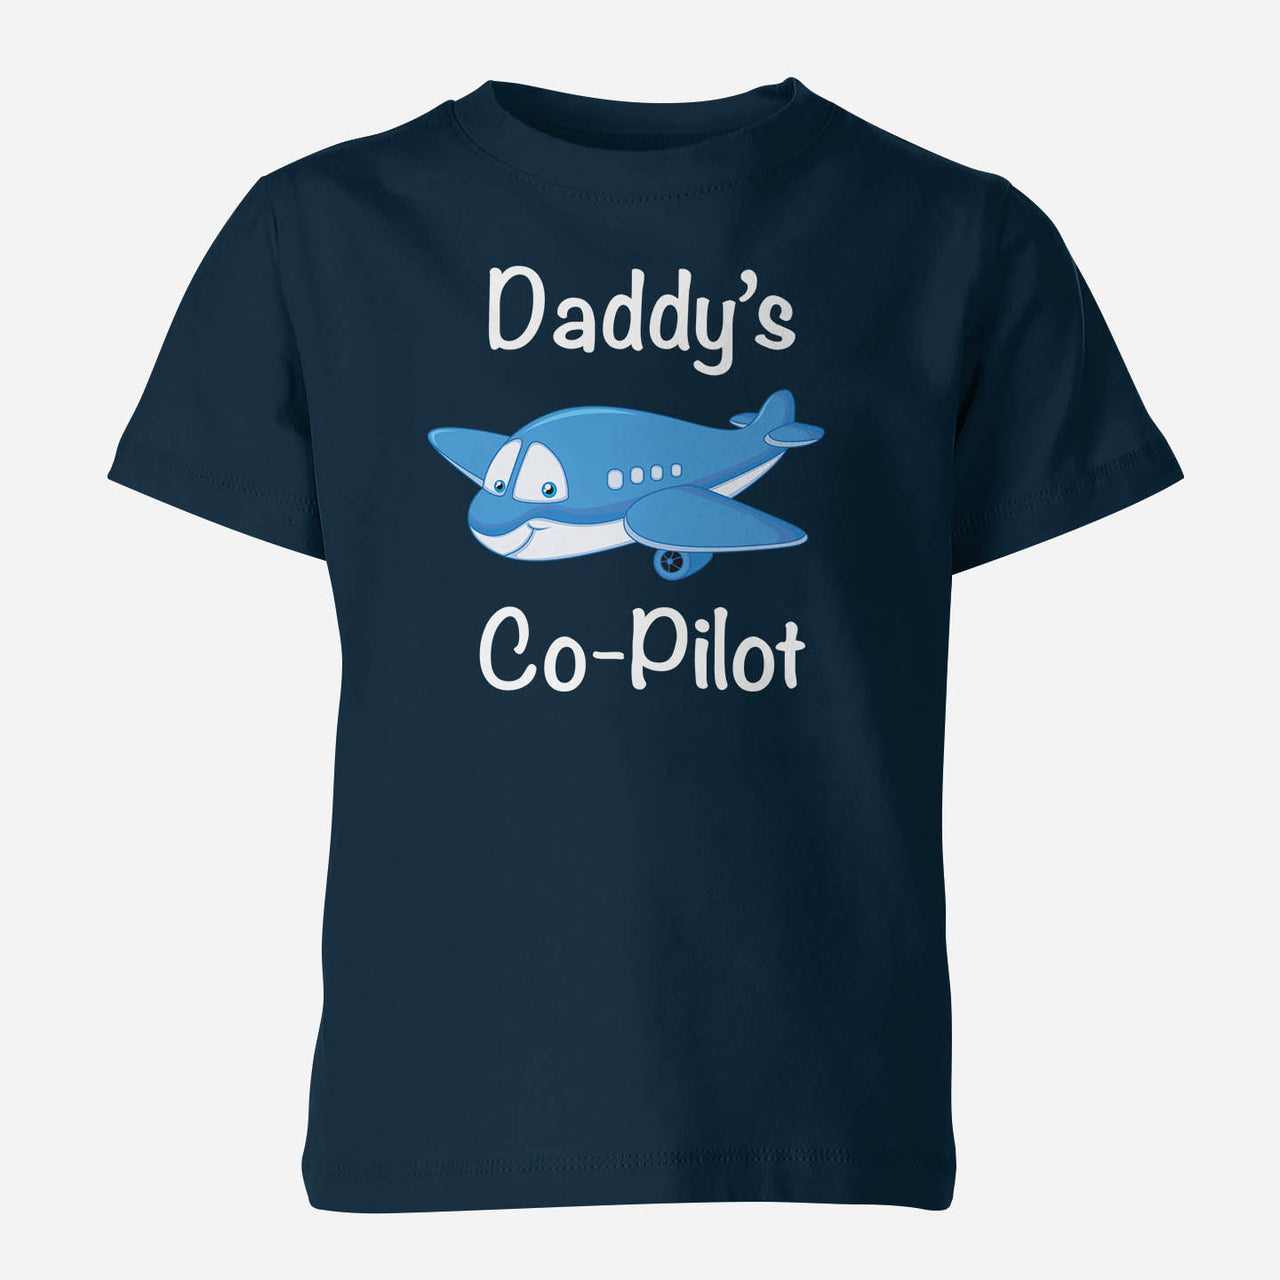 Daddy's Co-Pilot (Jet Airplane) Designed Children T-Shirts